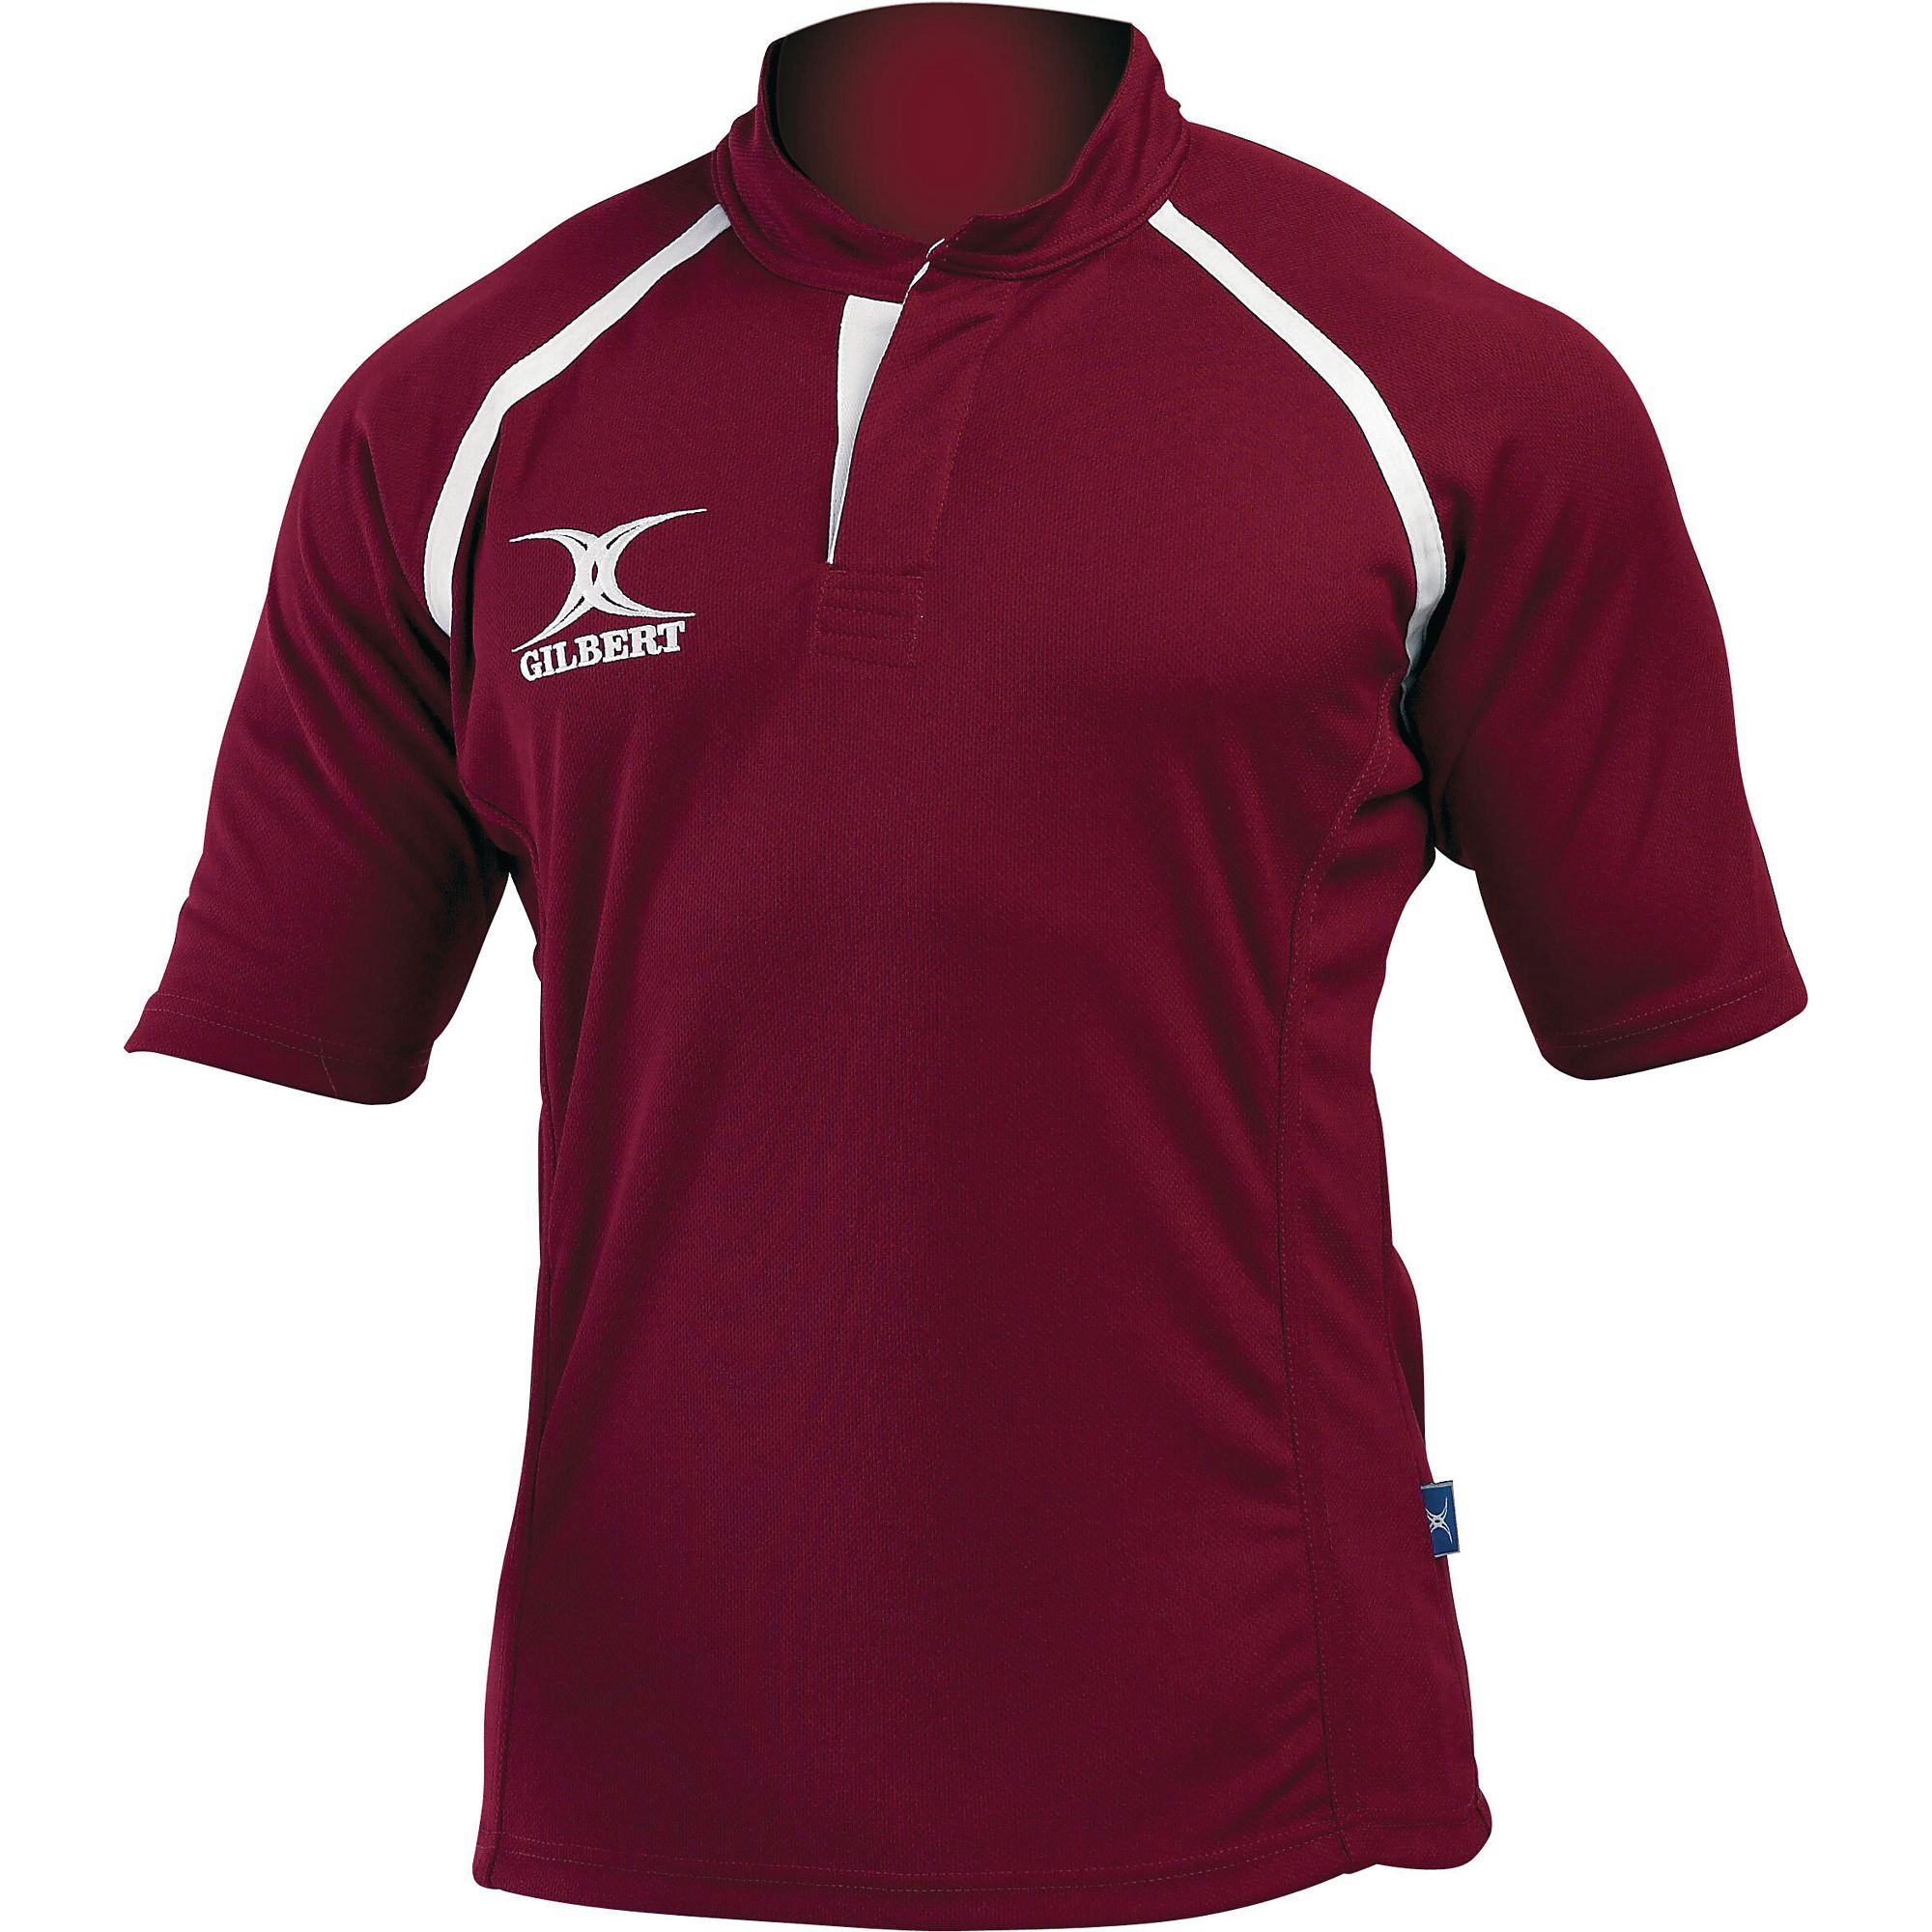 Gilbert Plain Rugby Shirt 26in Maroon